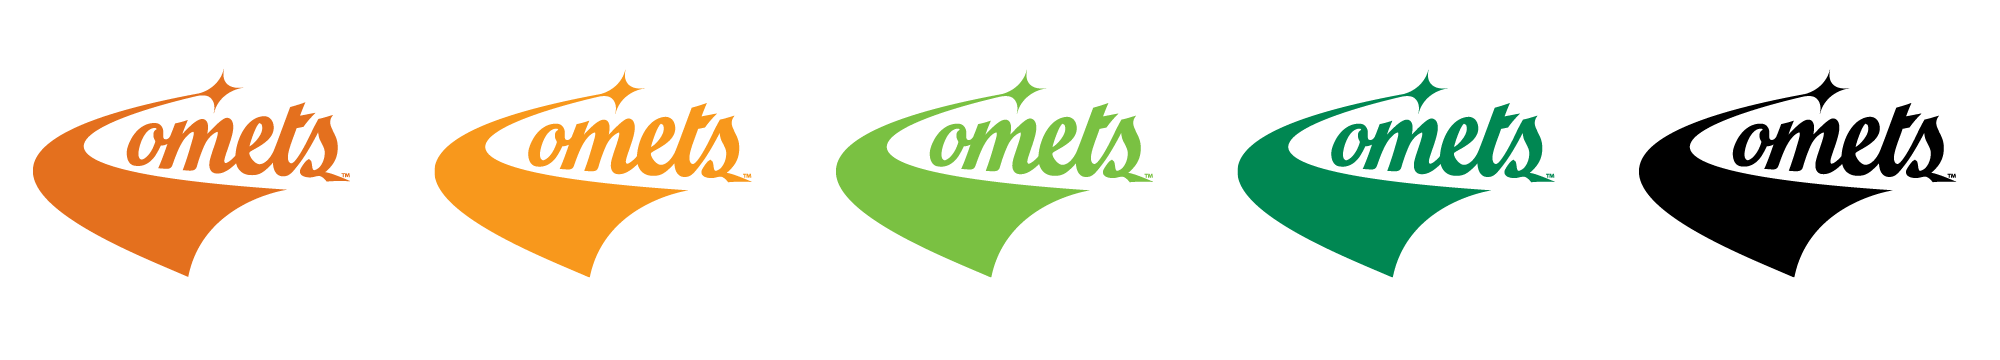 Utd Comets Logo - Specialty Logos - Brand Standards - The University of Texas at Dallas